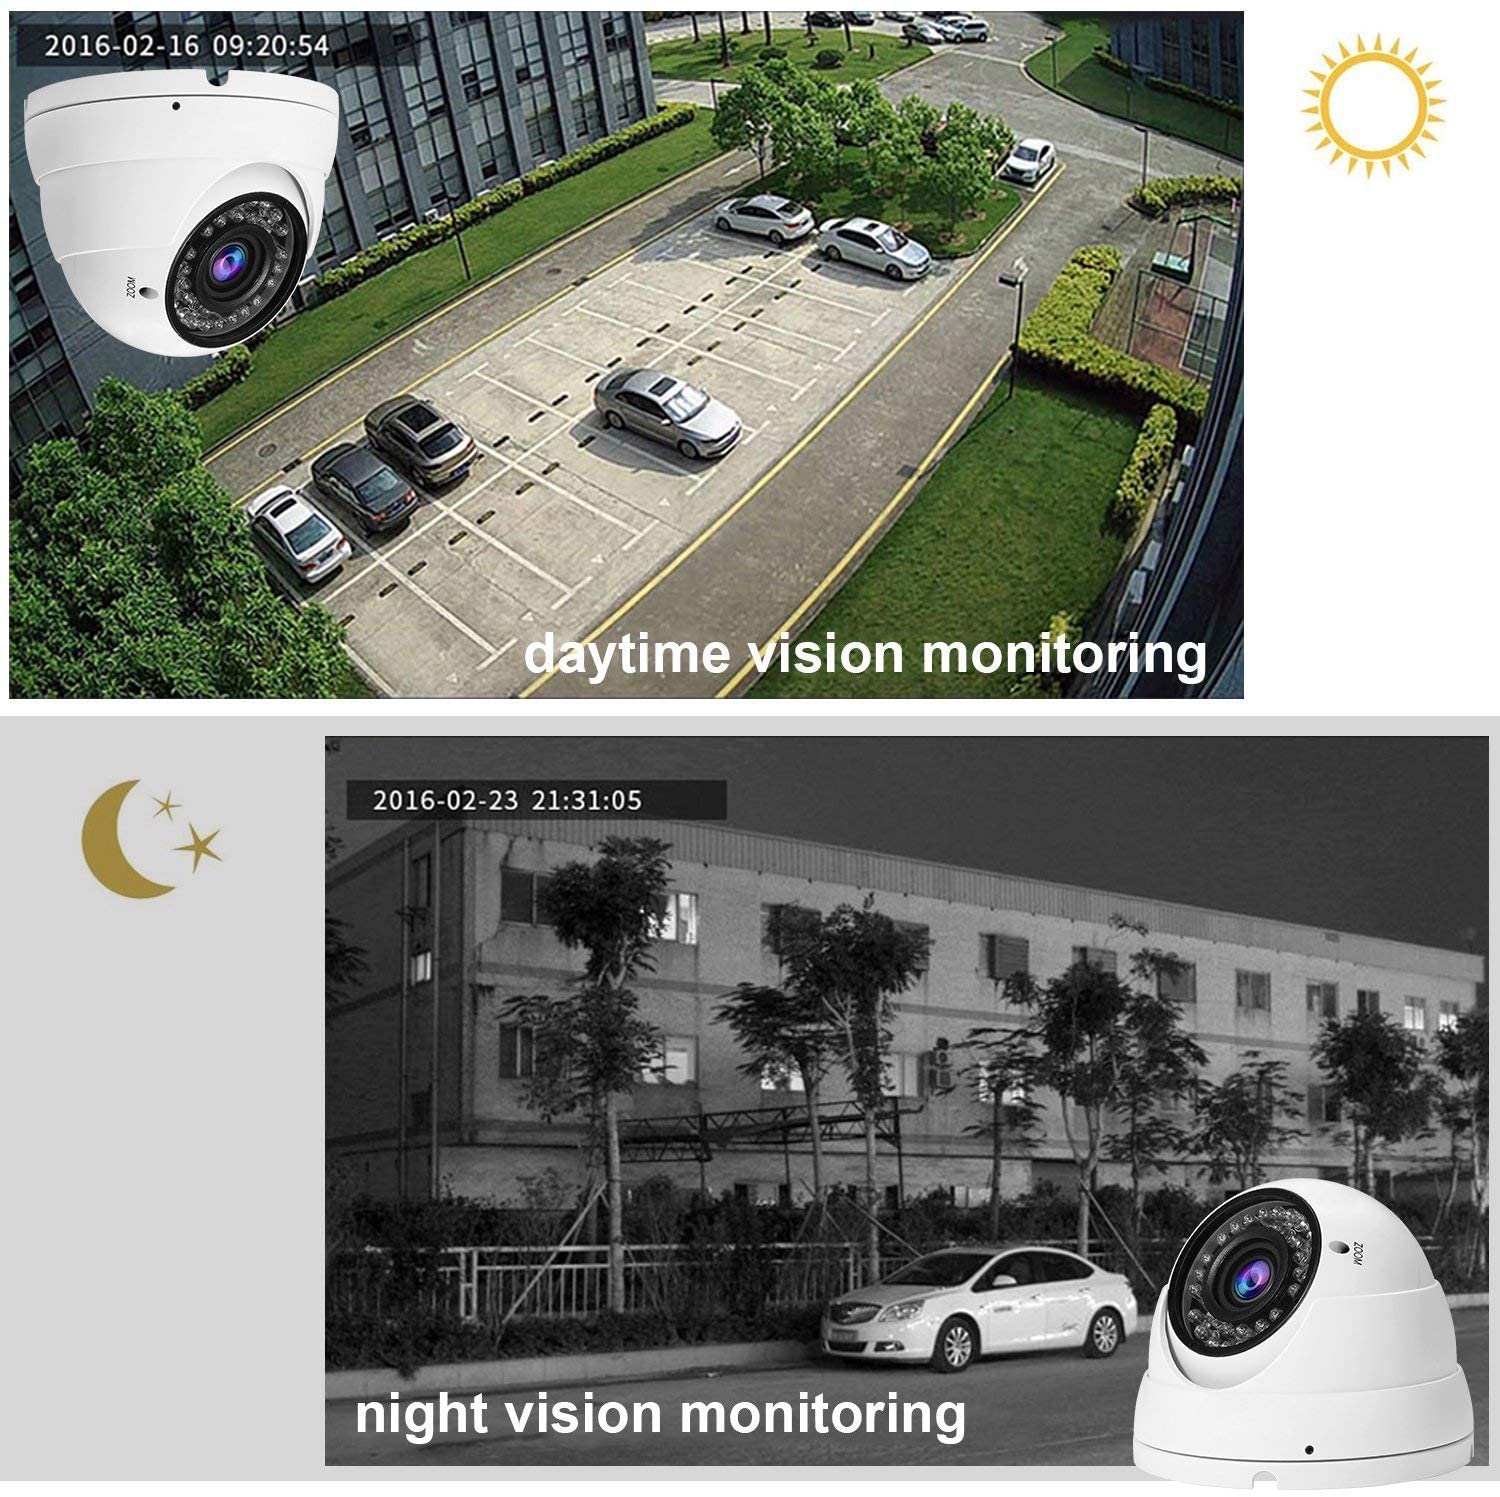 Analog CCTV Camera HD 1080P TVI AHD CVI CVBS Security Dome Camera with 2.8mm-12mm Manual Focus Zoom Lens Camera